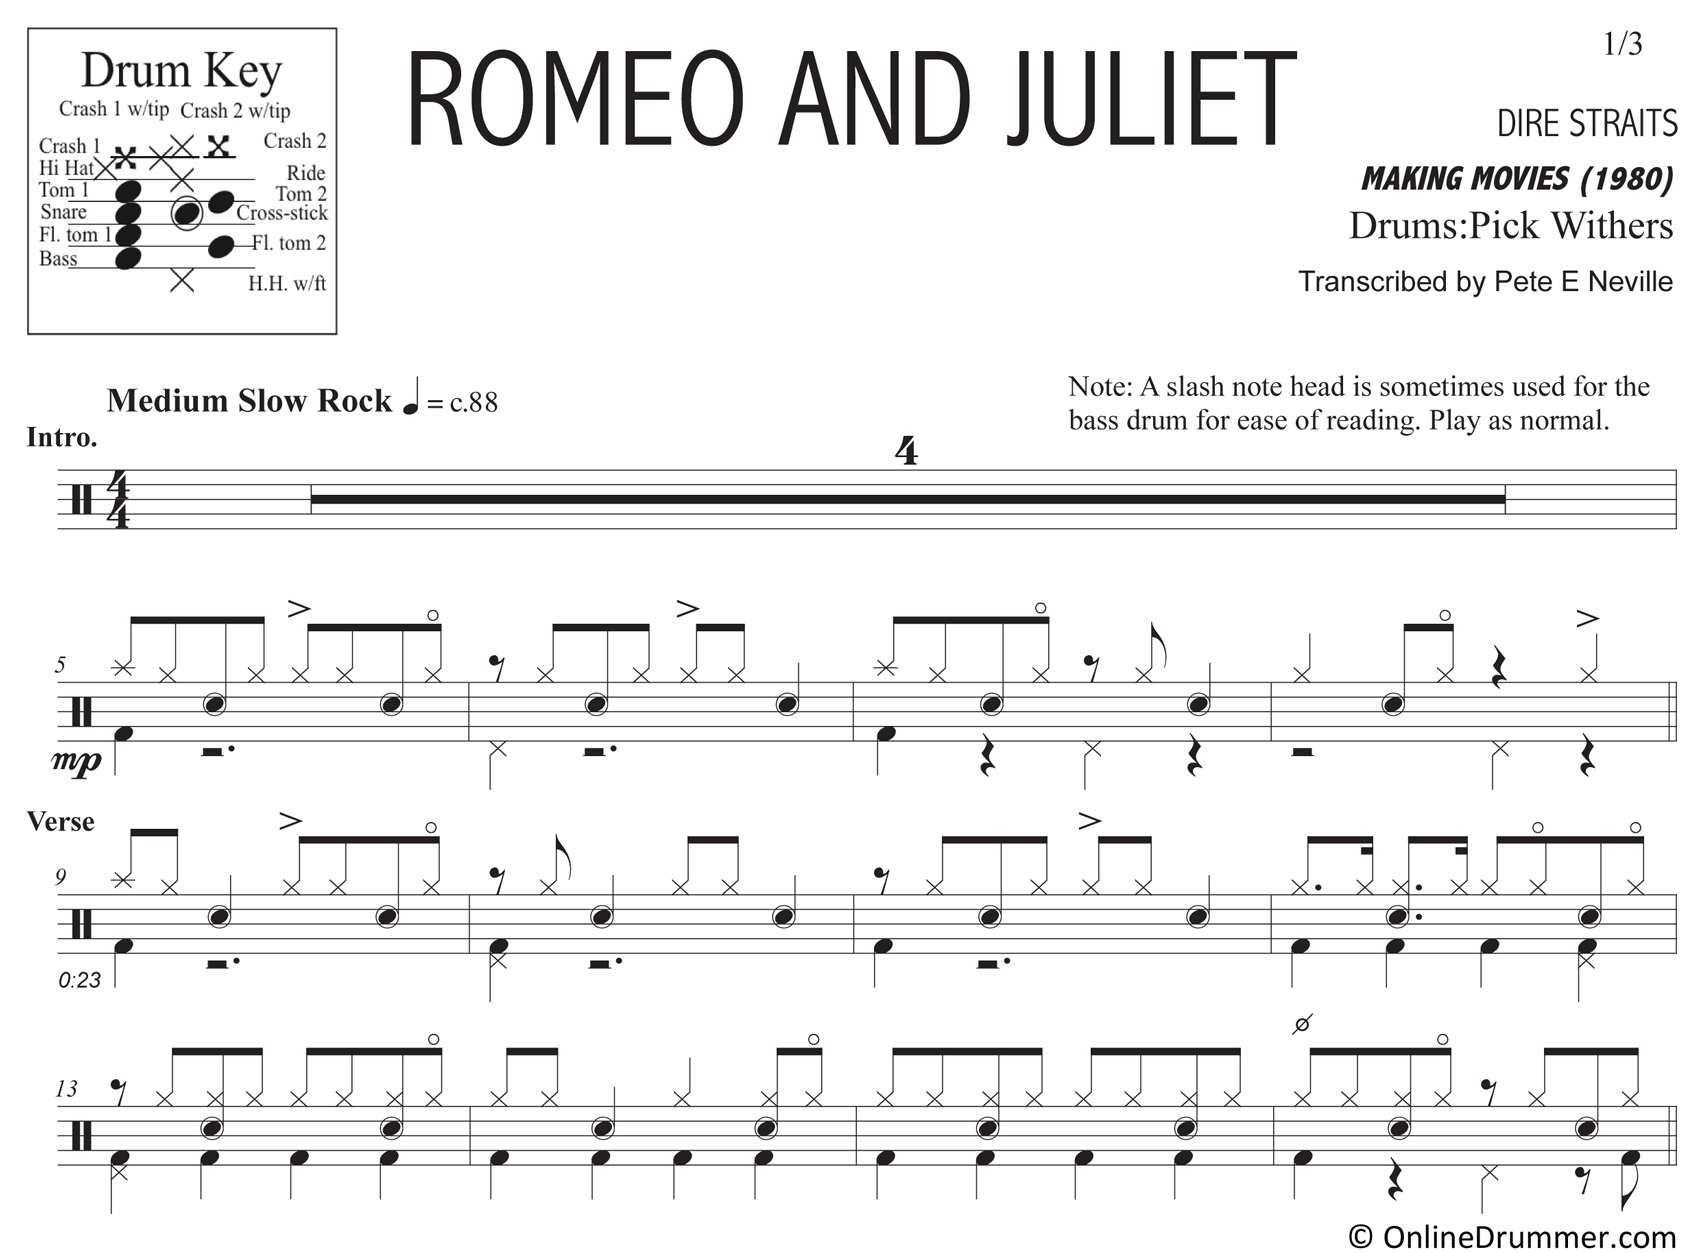 Romeo and Juliet - Dire Straits - Drum Sheet Music